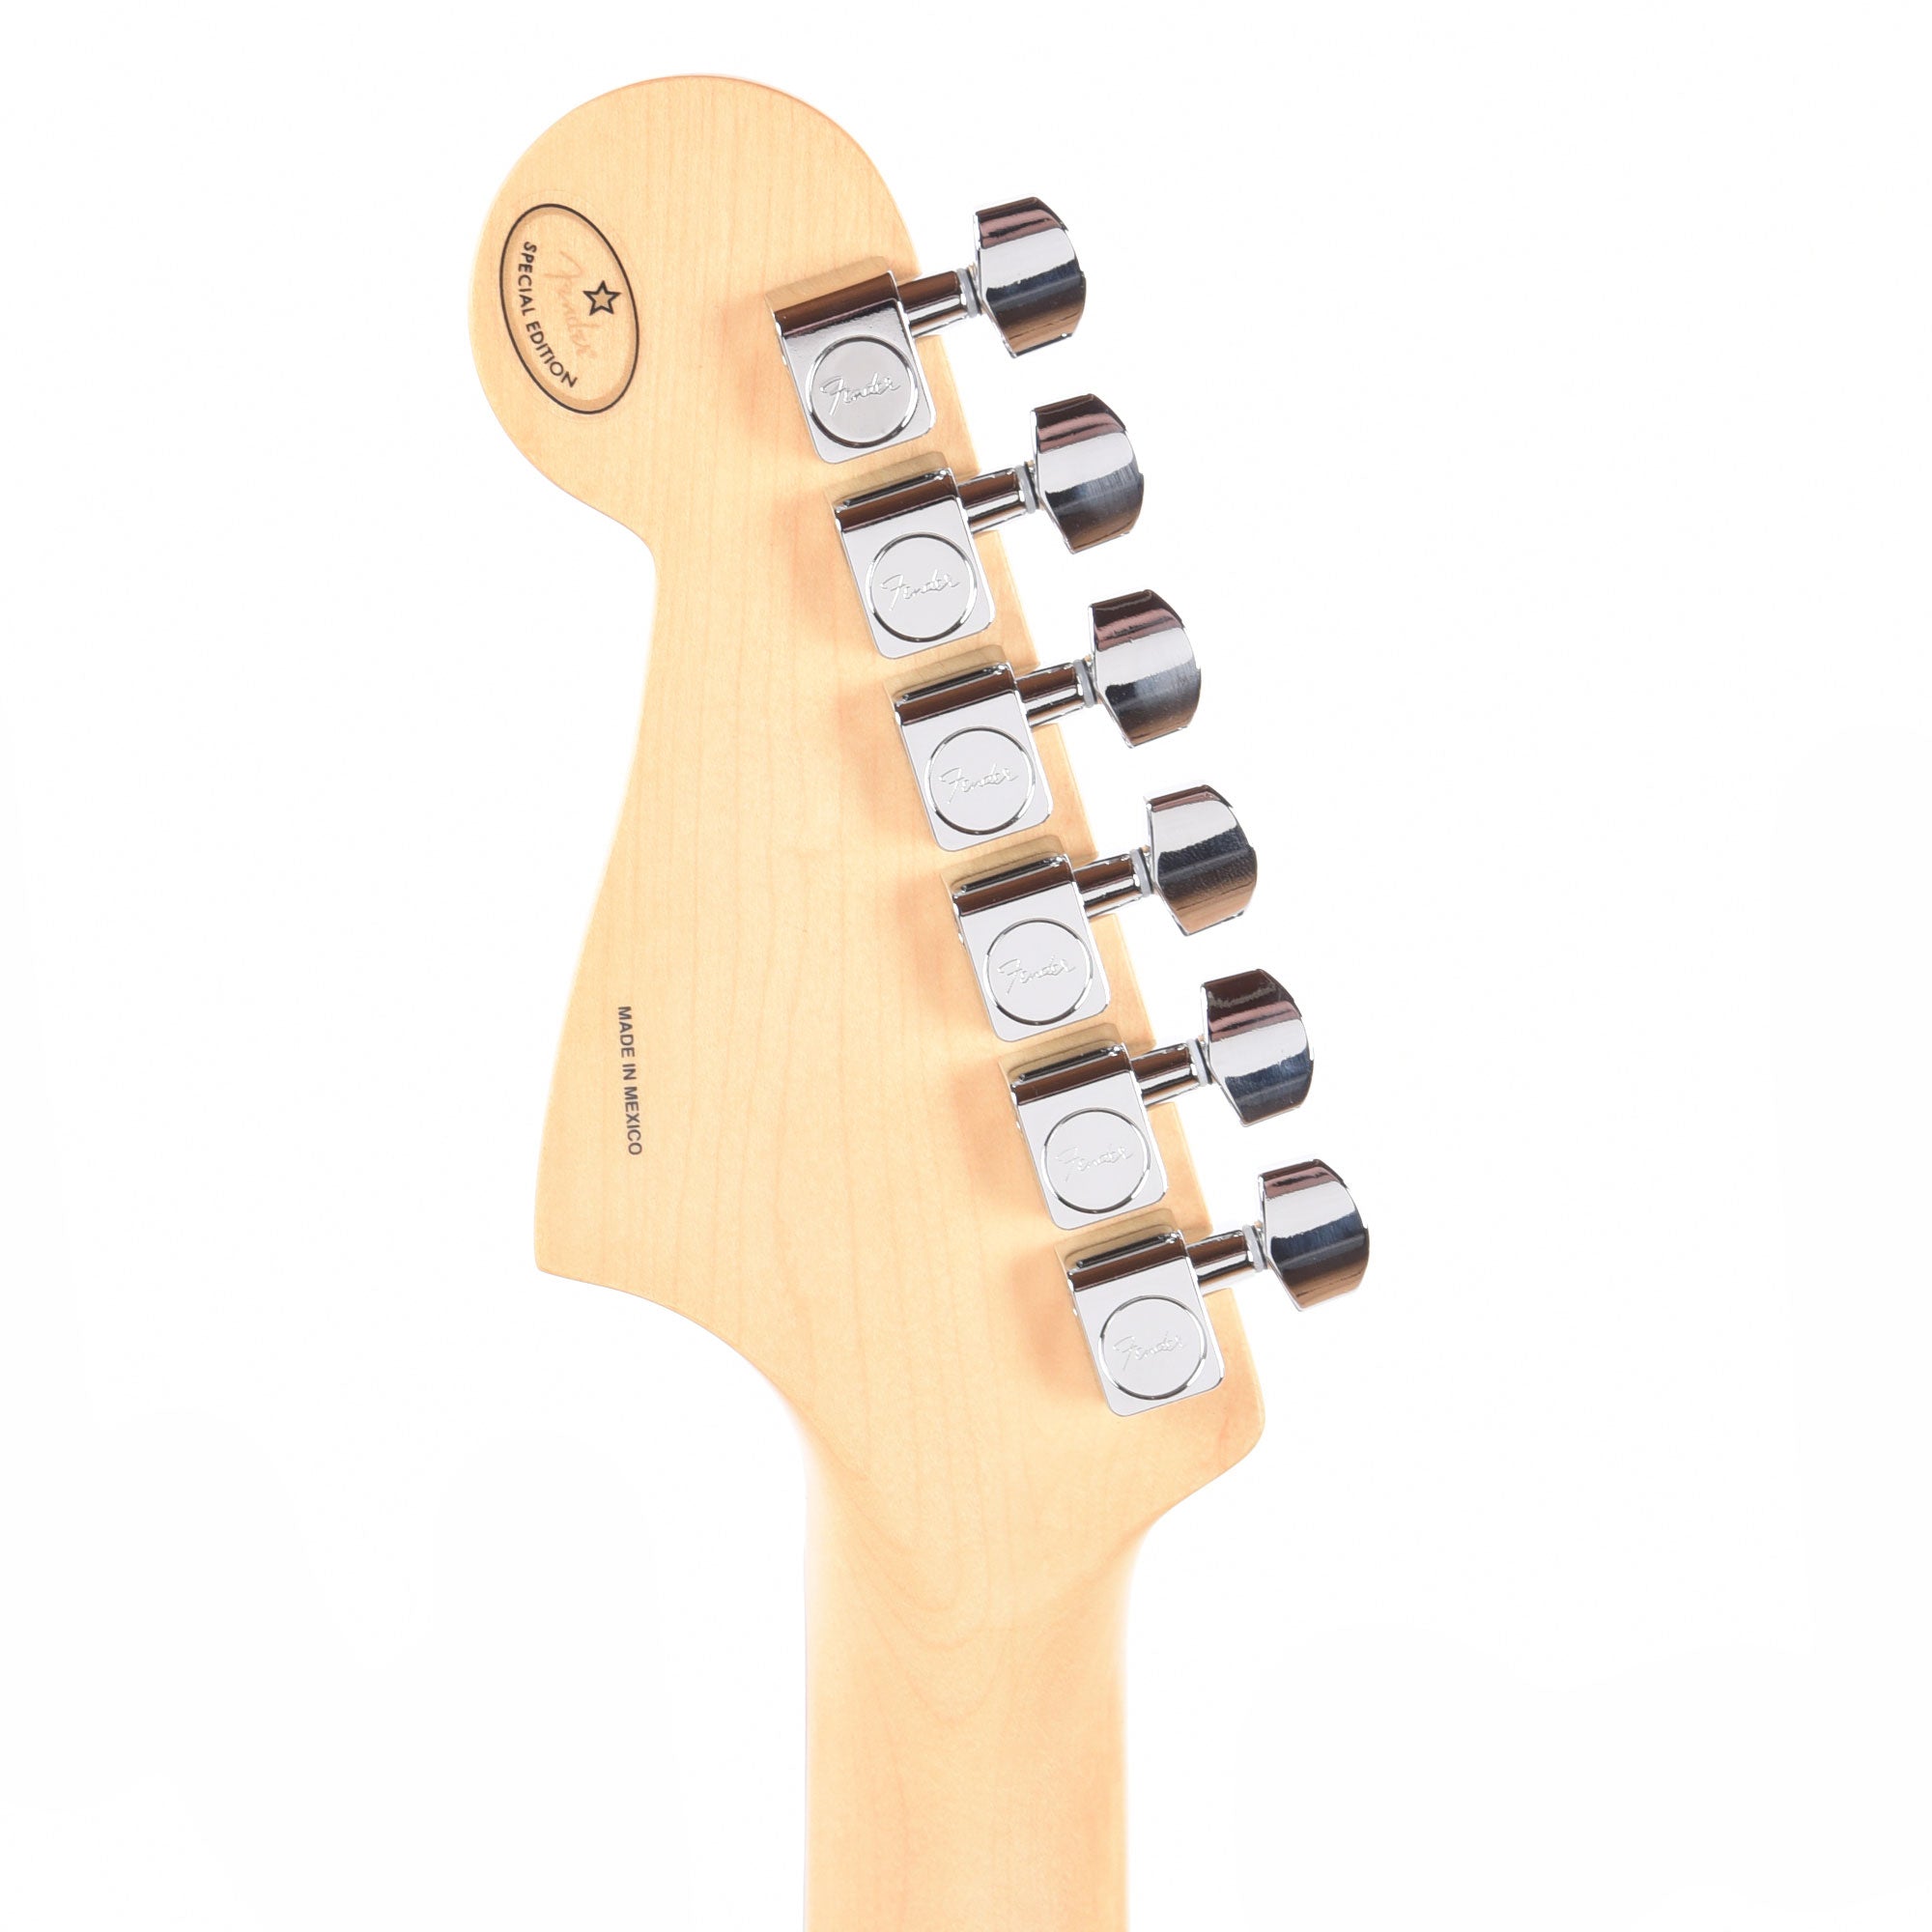 Fender Player Jazzmaster 3-Color Sunburst w/Black Headcap